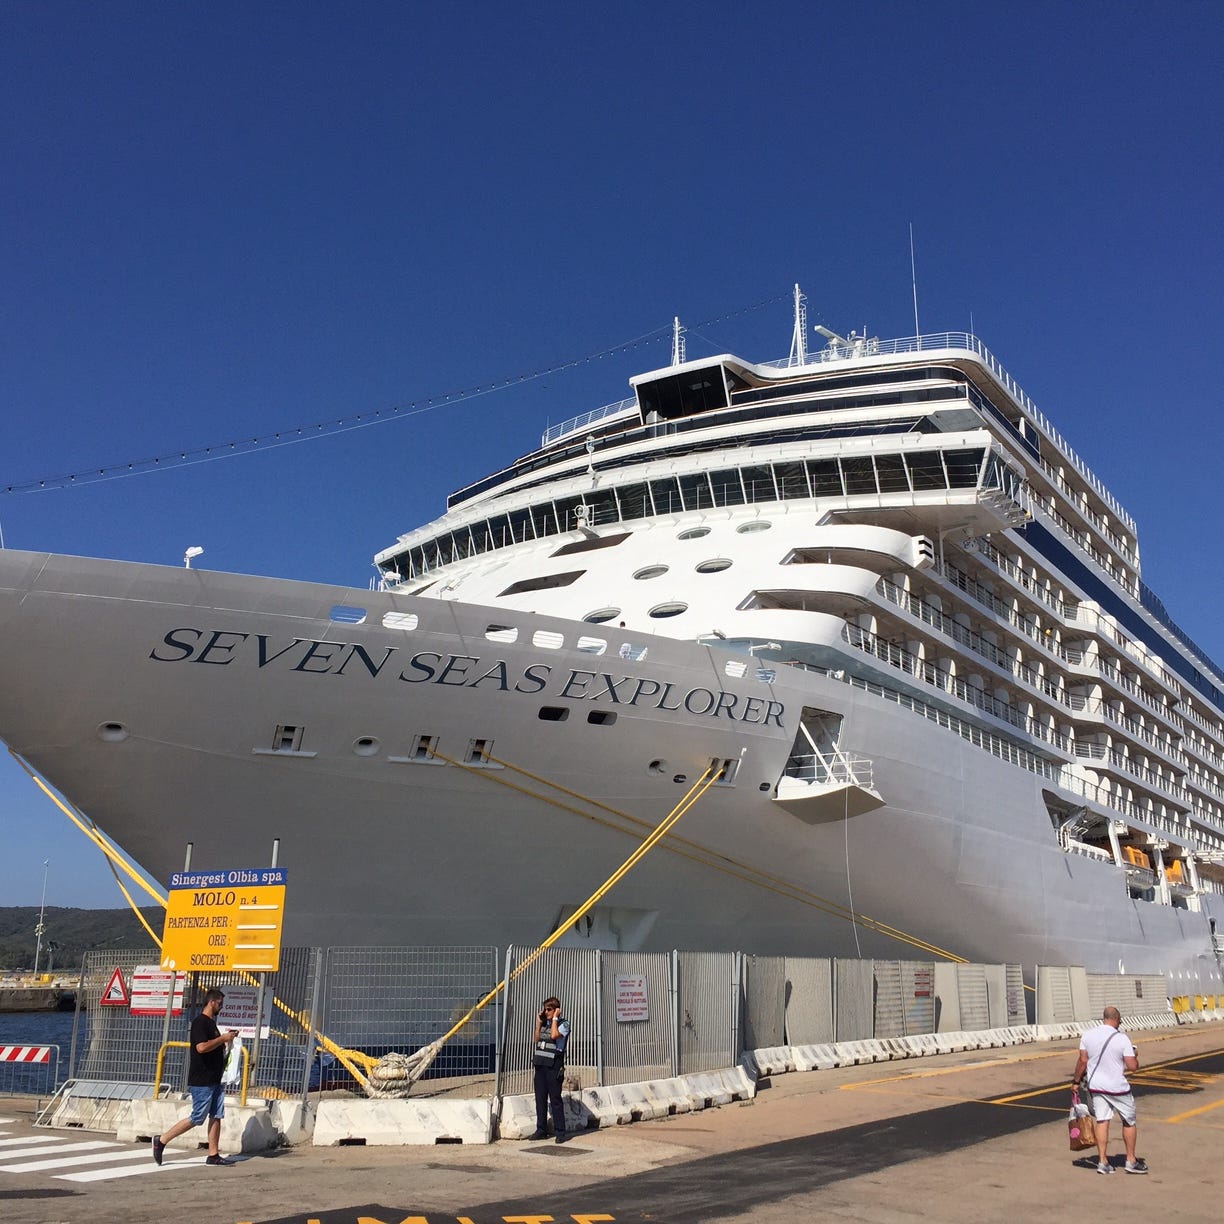 The 750-passenger Seven Seas Explorer docked in Olbia, Sardinia in July 2016.